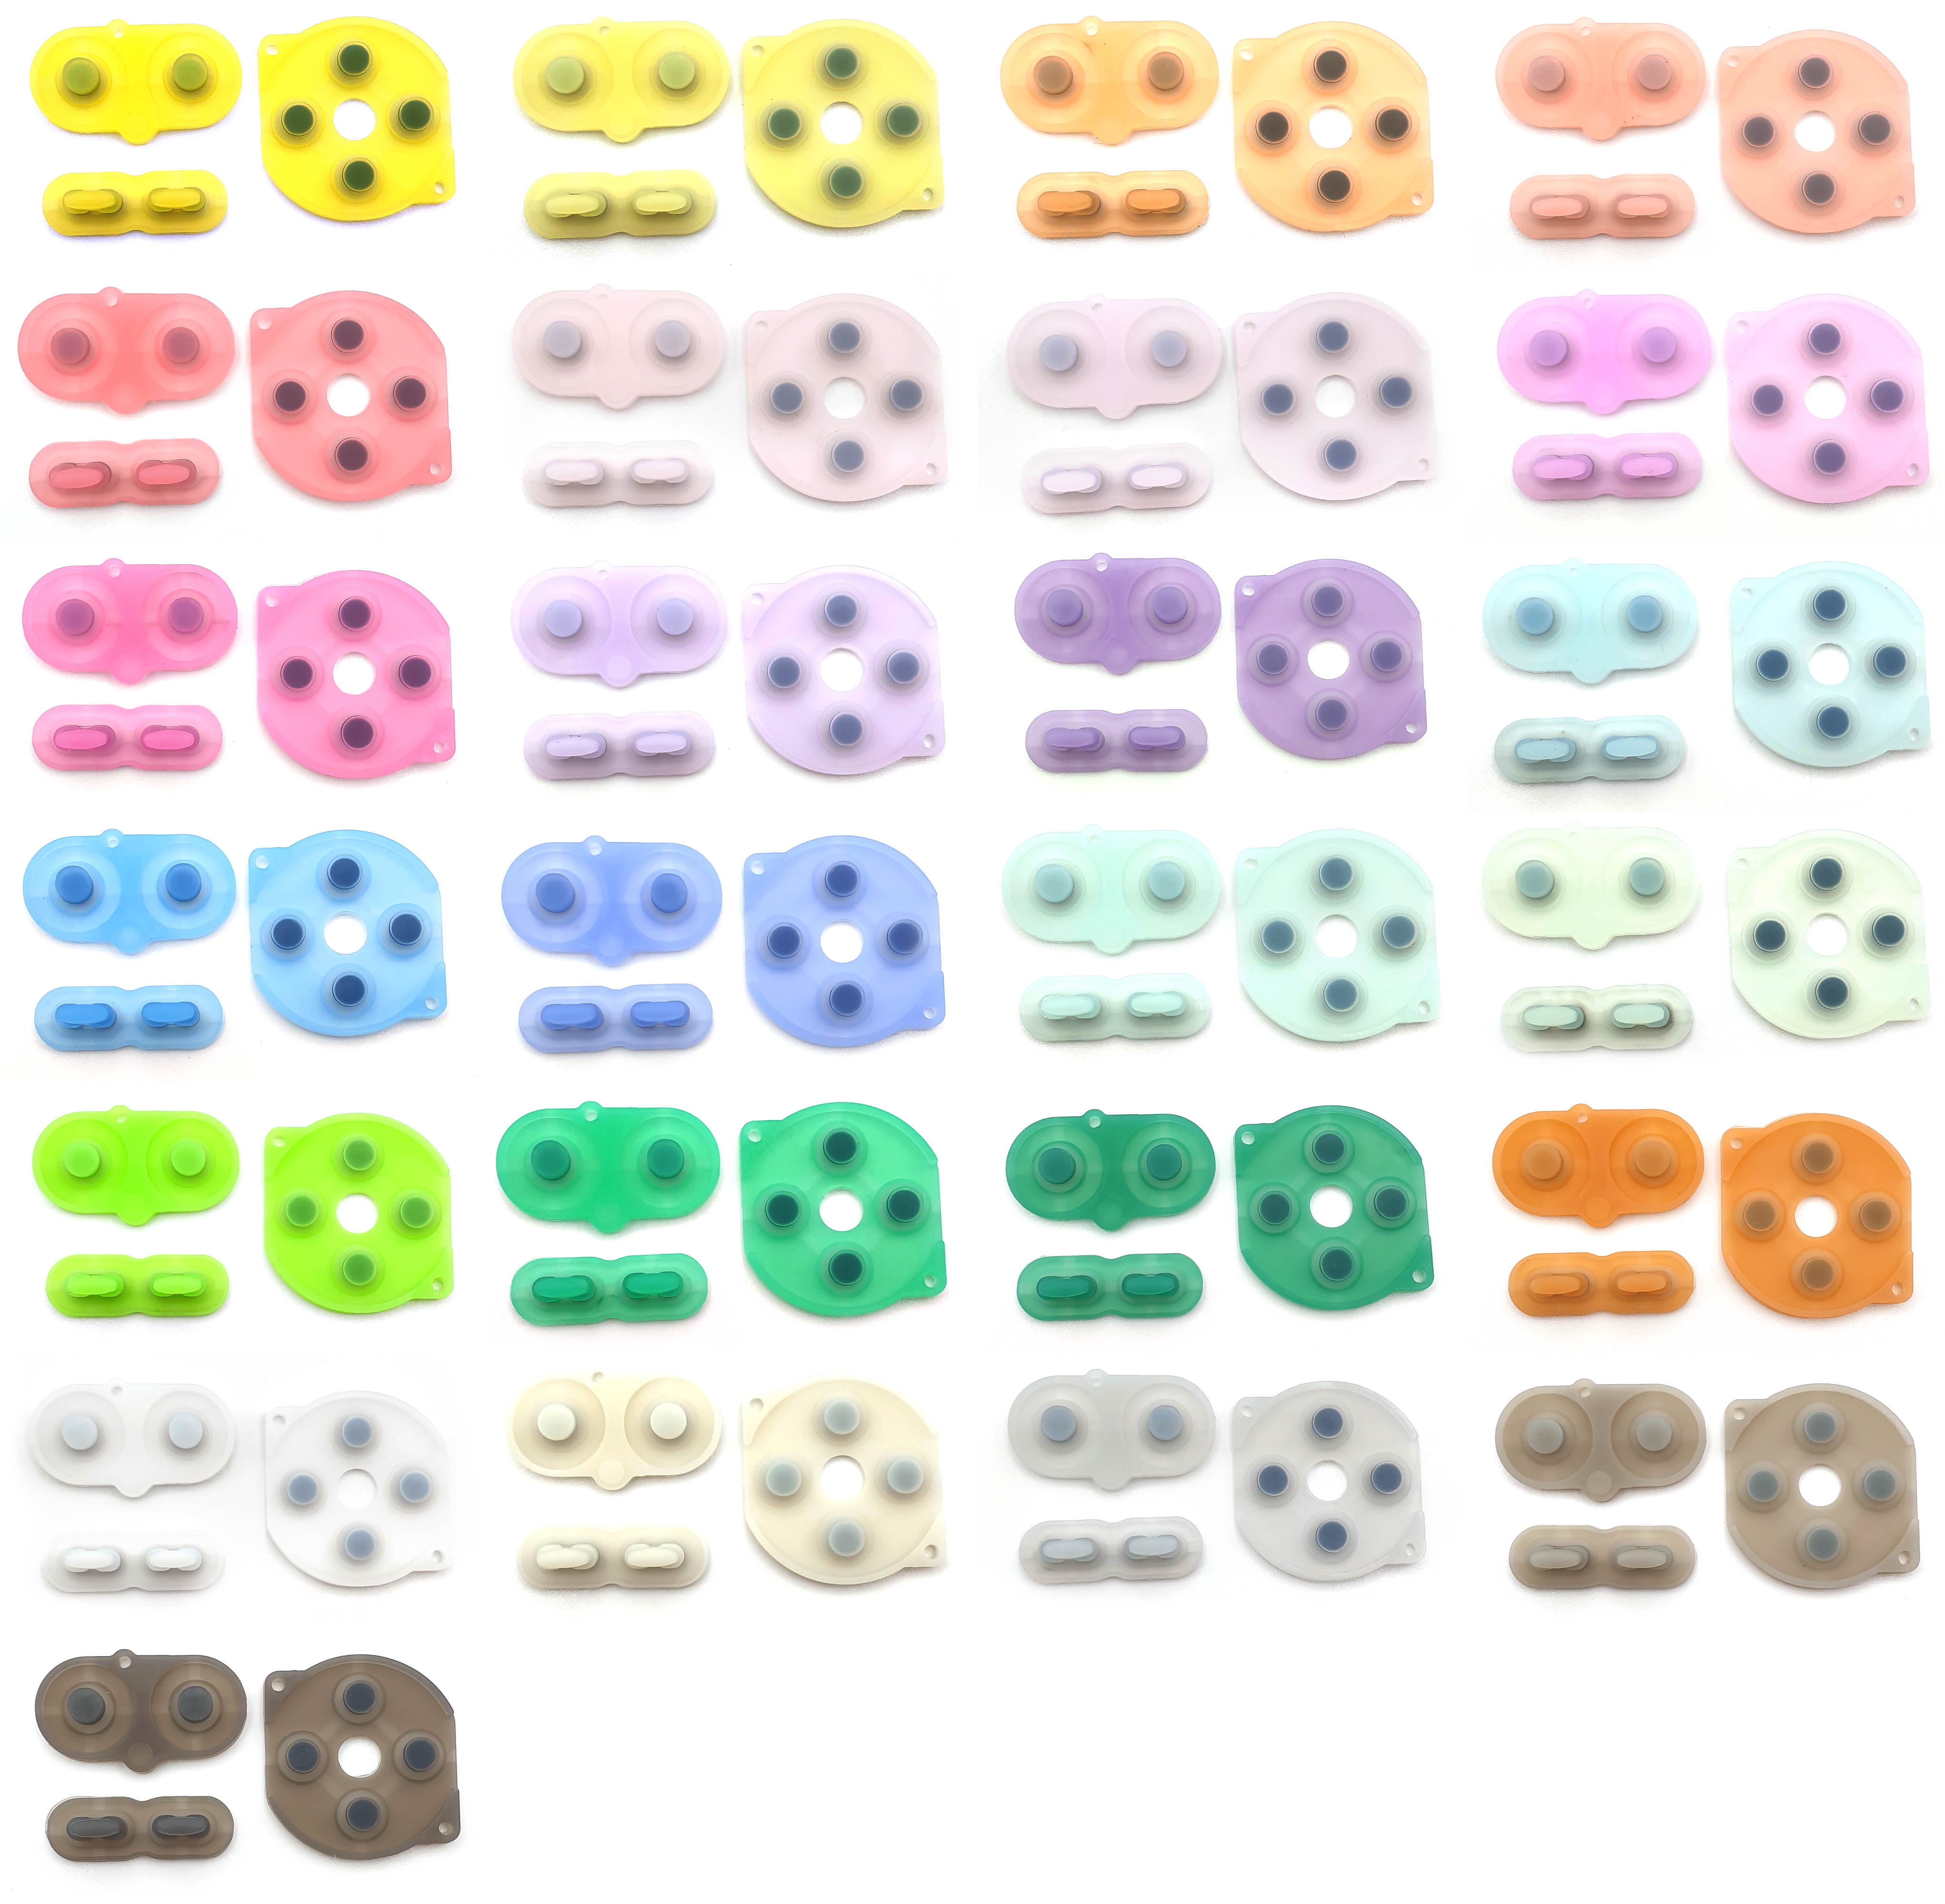 GameBoy Color: Silikonpads Transparent (By Retrohahn)